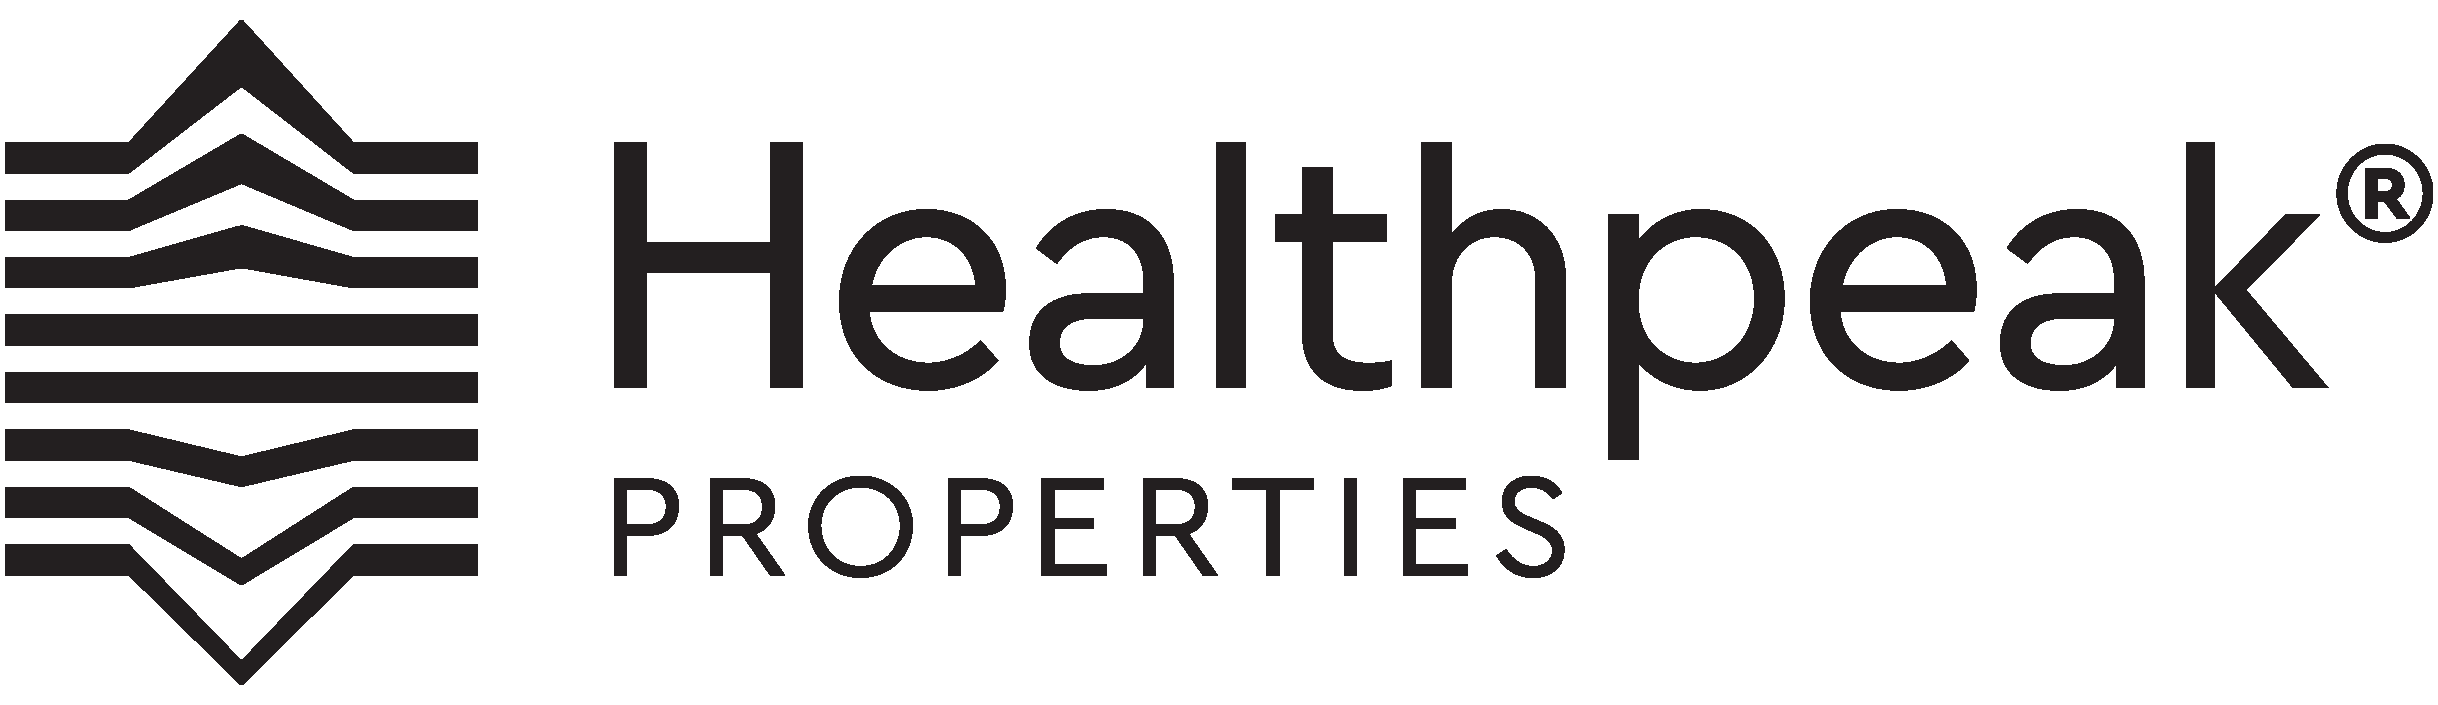 Healthpeak Properties Company Logo